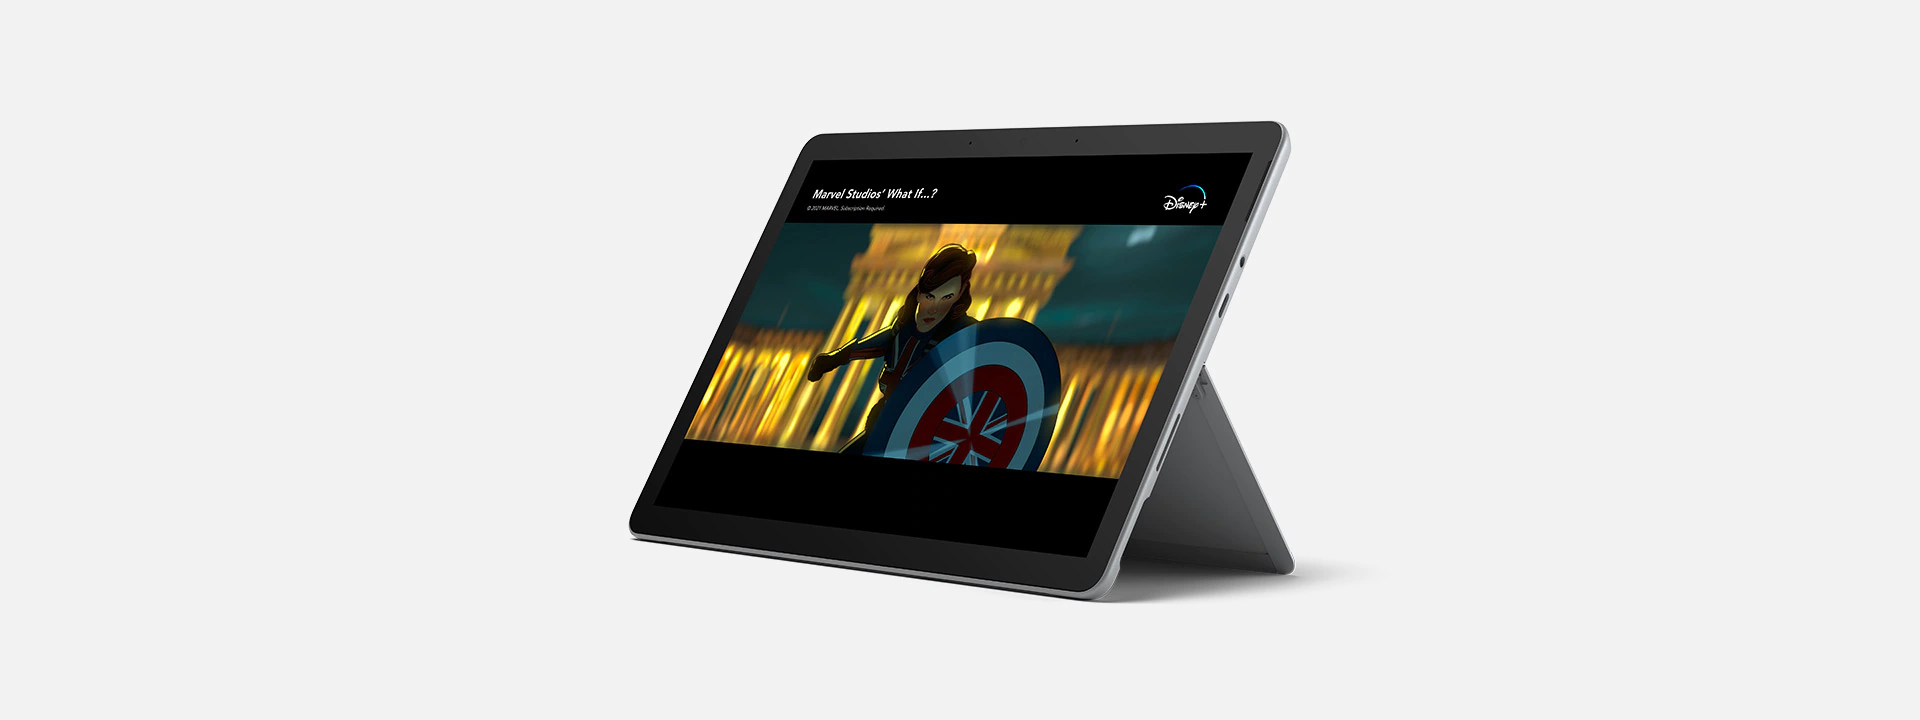 Microsoft Surface Go 3 tableta 10.5 pulgadas fhd intel core 8v900004 4gb 64gb convertible 2 en 1 105 i310100y 4 64 11